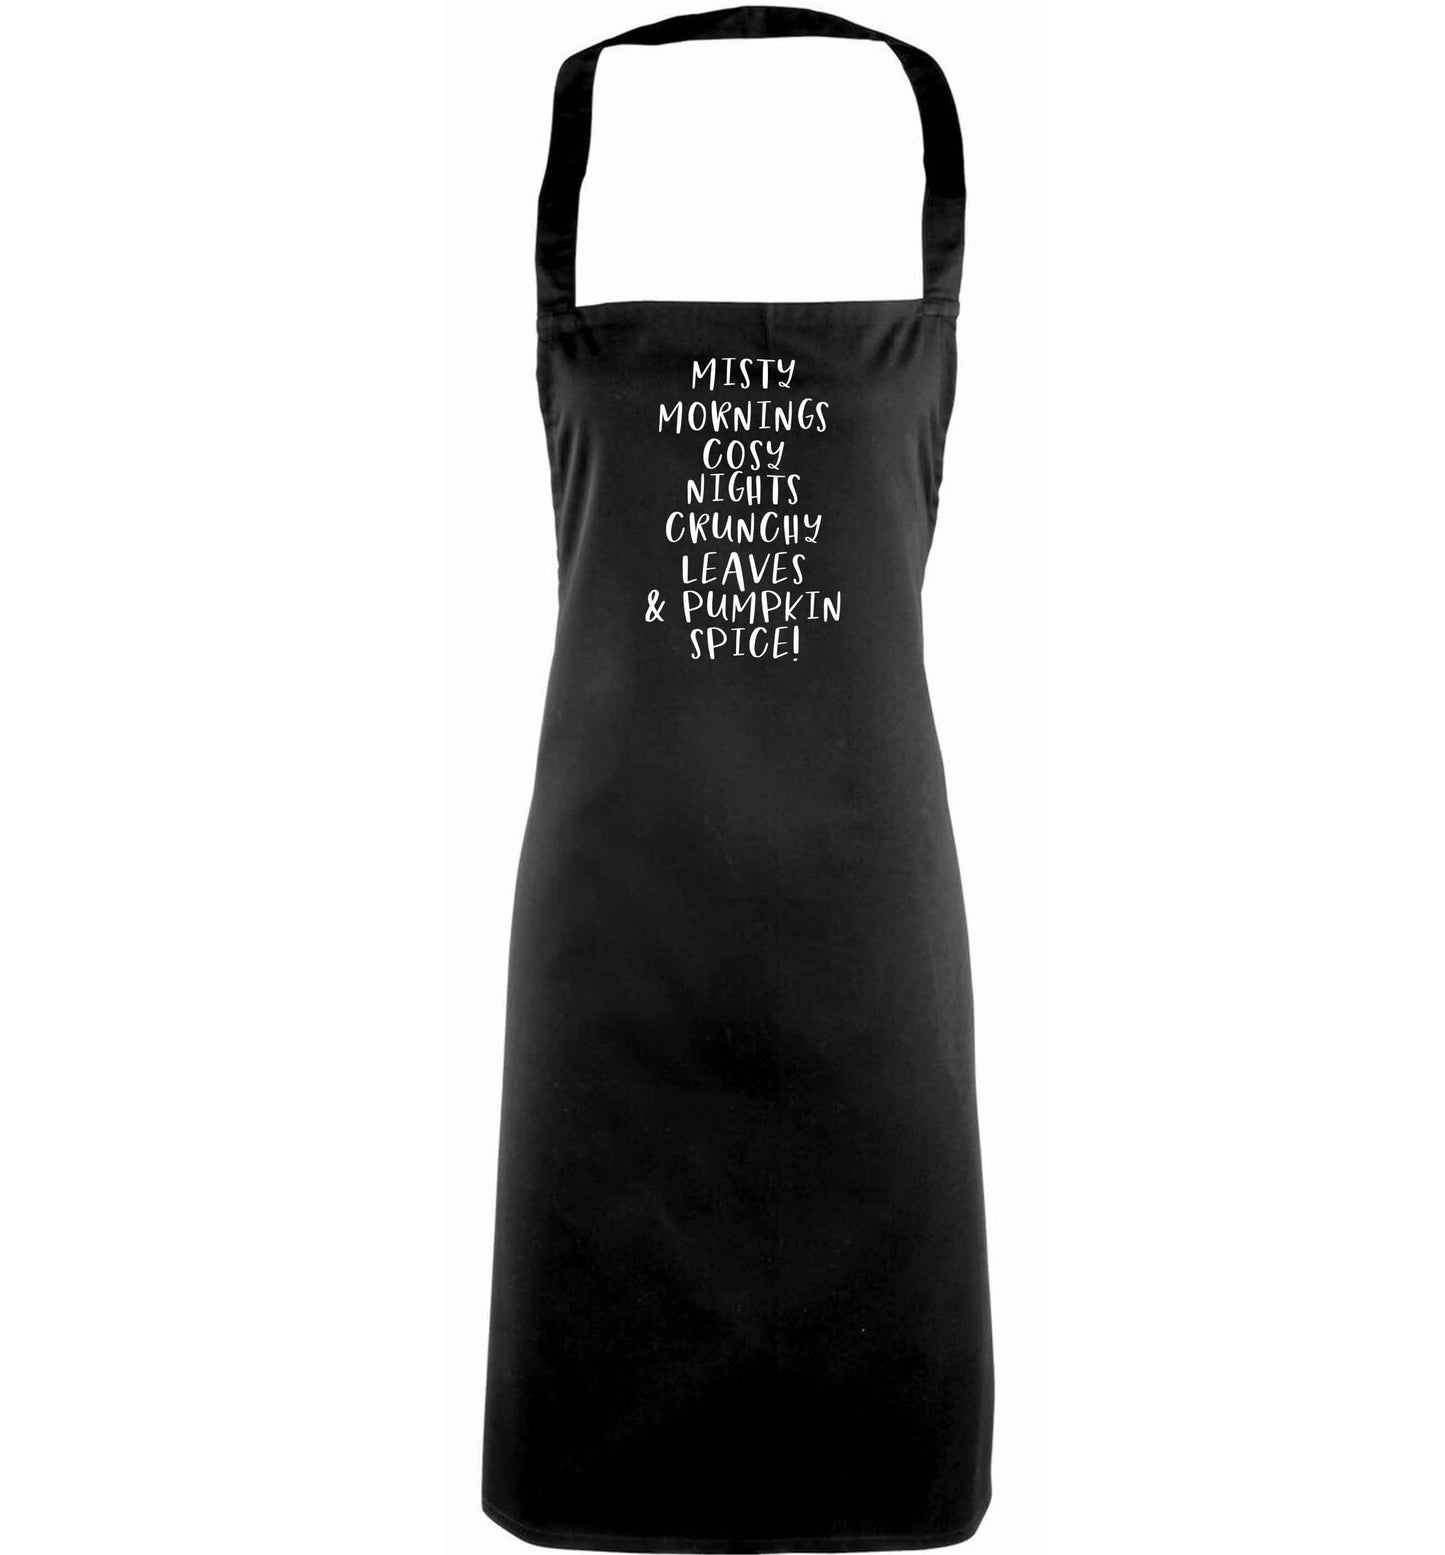 Misty Mornings adults black apron